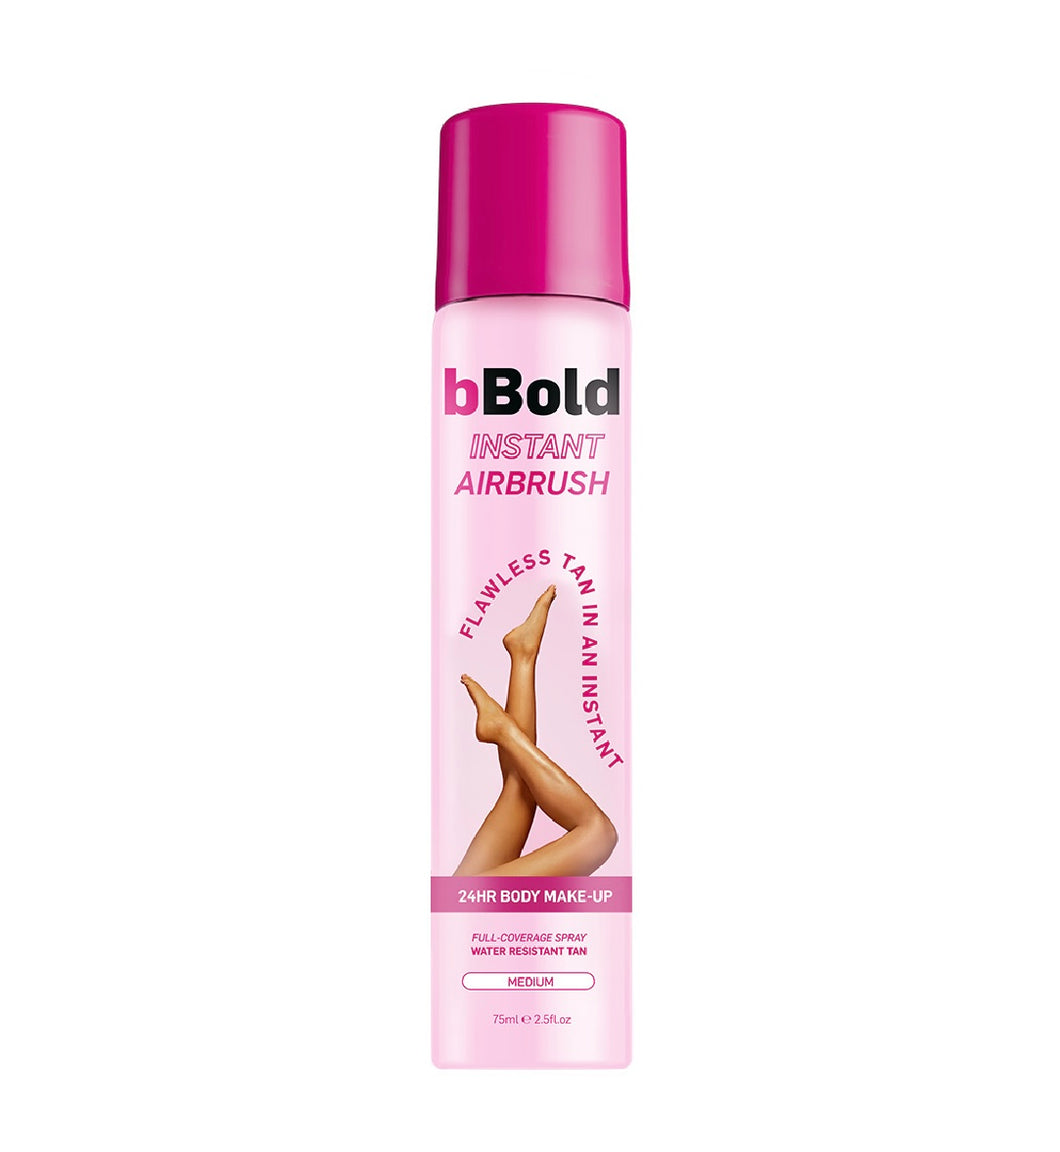 bBold Instant Airbrush Body Make-Up - Medium